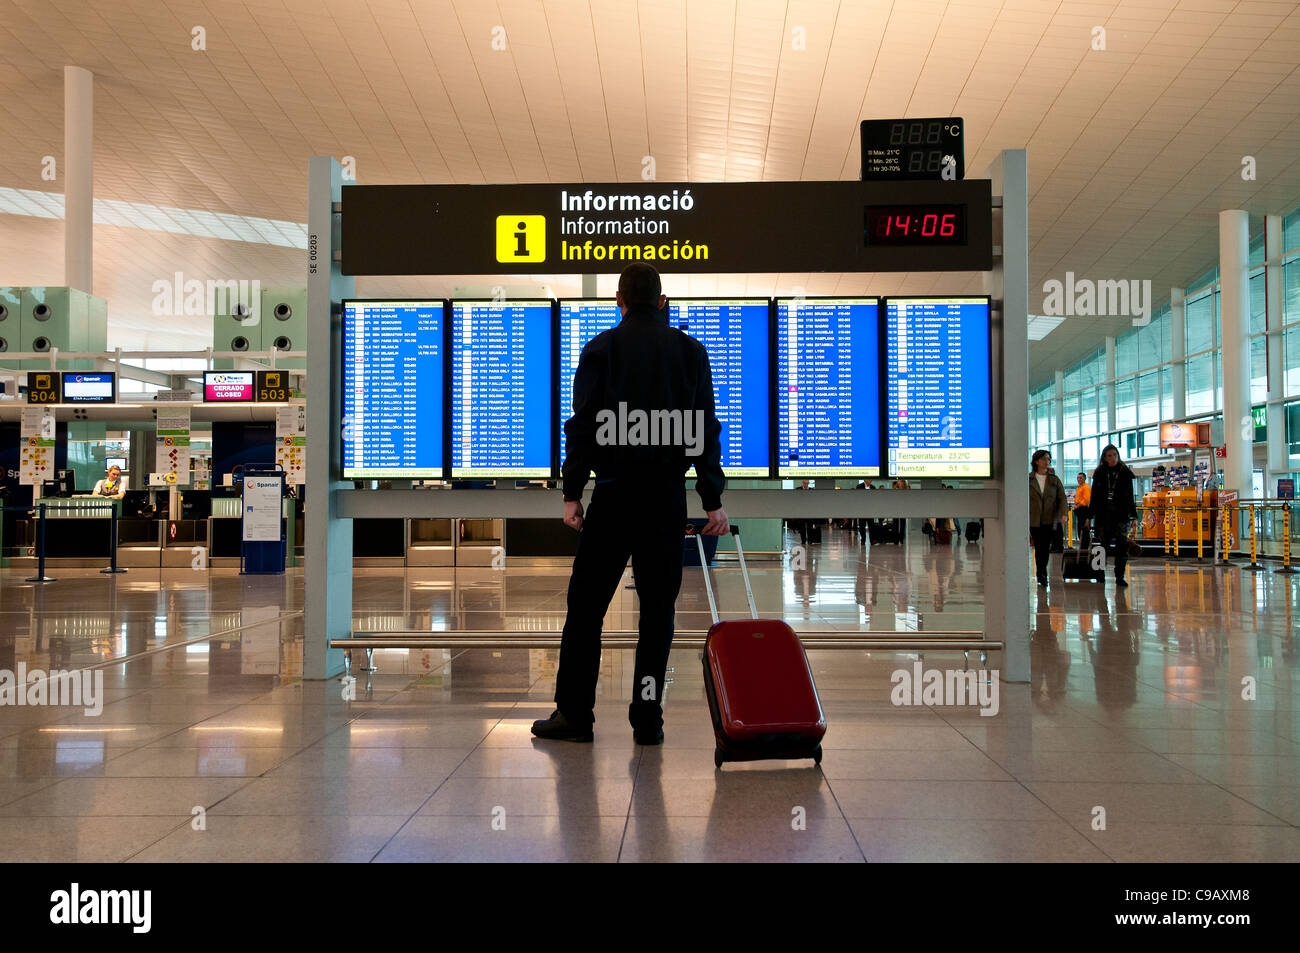 Аэропорт Эль-ПРАТ вай фай. Аэропорт Эль-ПРАТ услуги предоставляемые пассажирам. АХМ аэропорт. WIFI В аэропорту Барселоне.